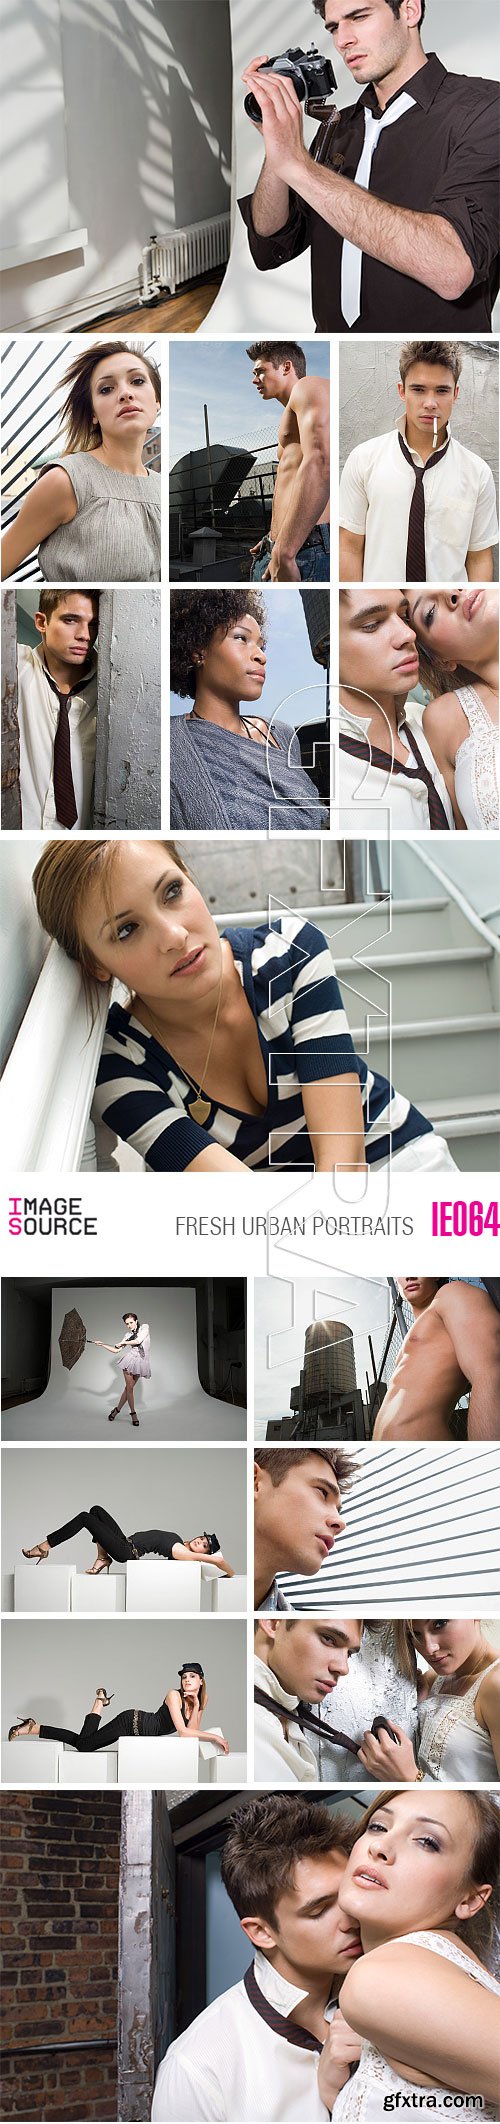 Image Source IE064 Fresh Urban Portraits